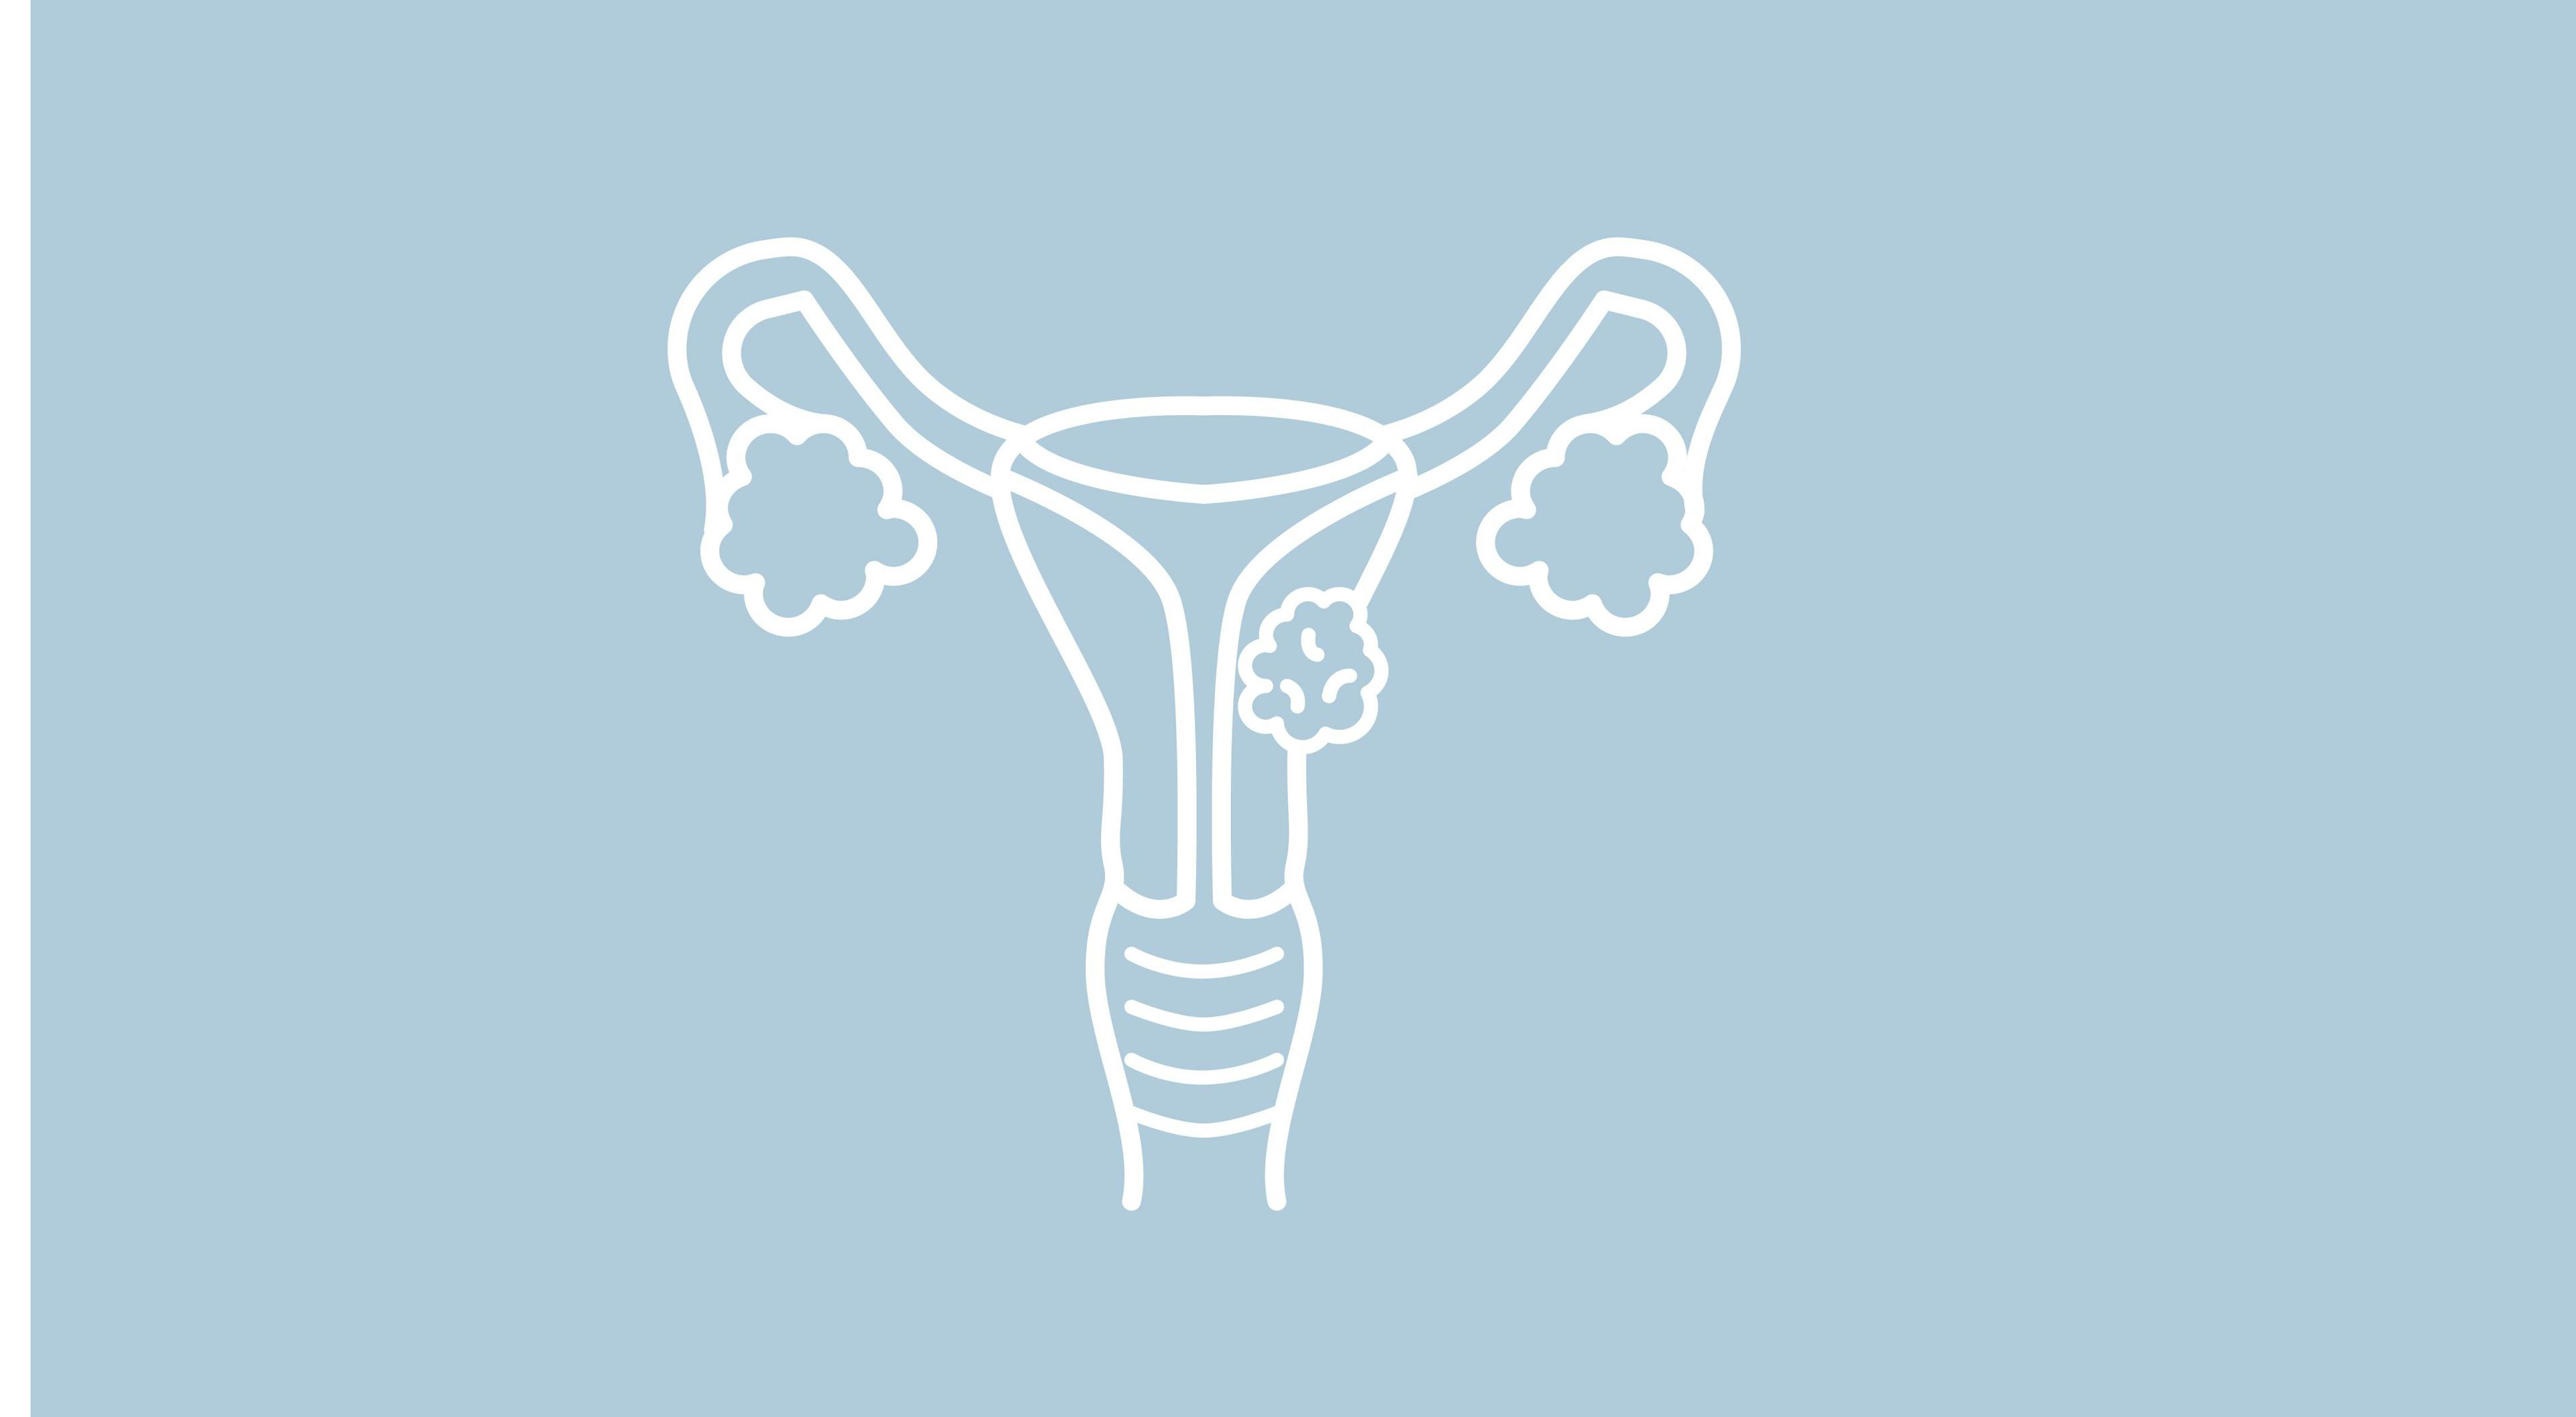 ovary, uterus, fallopian tube